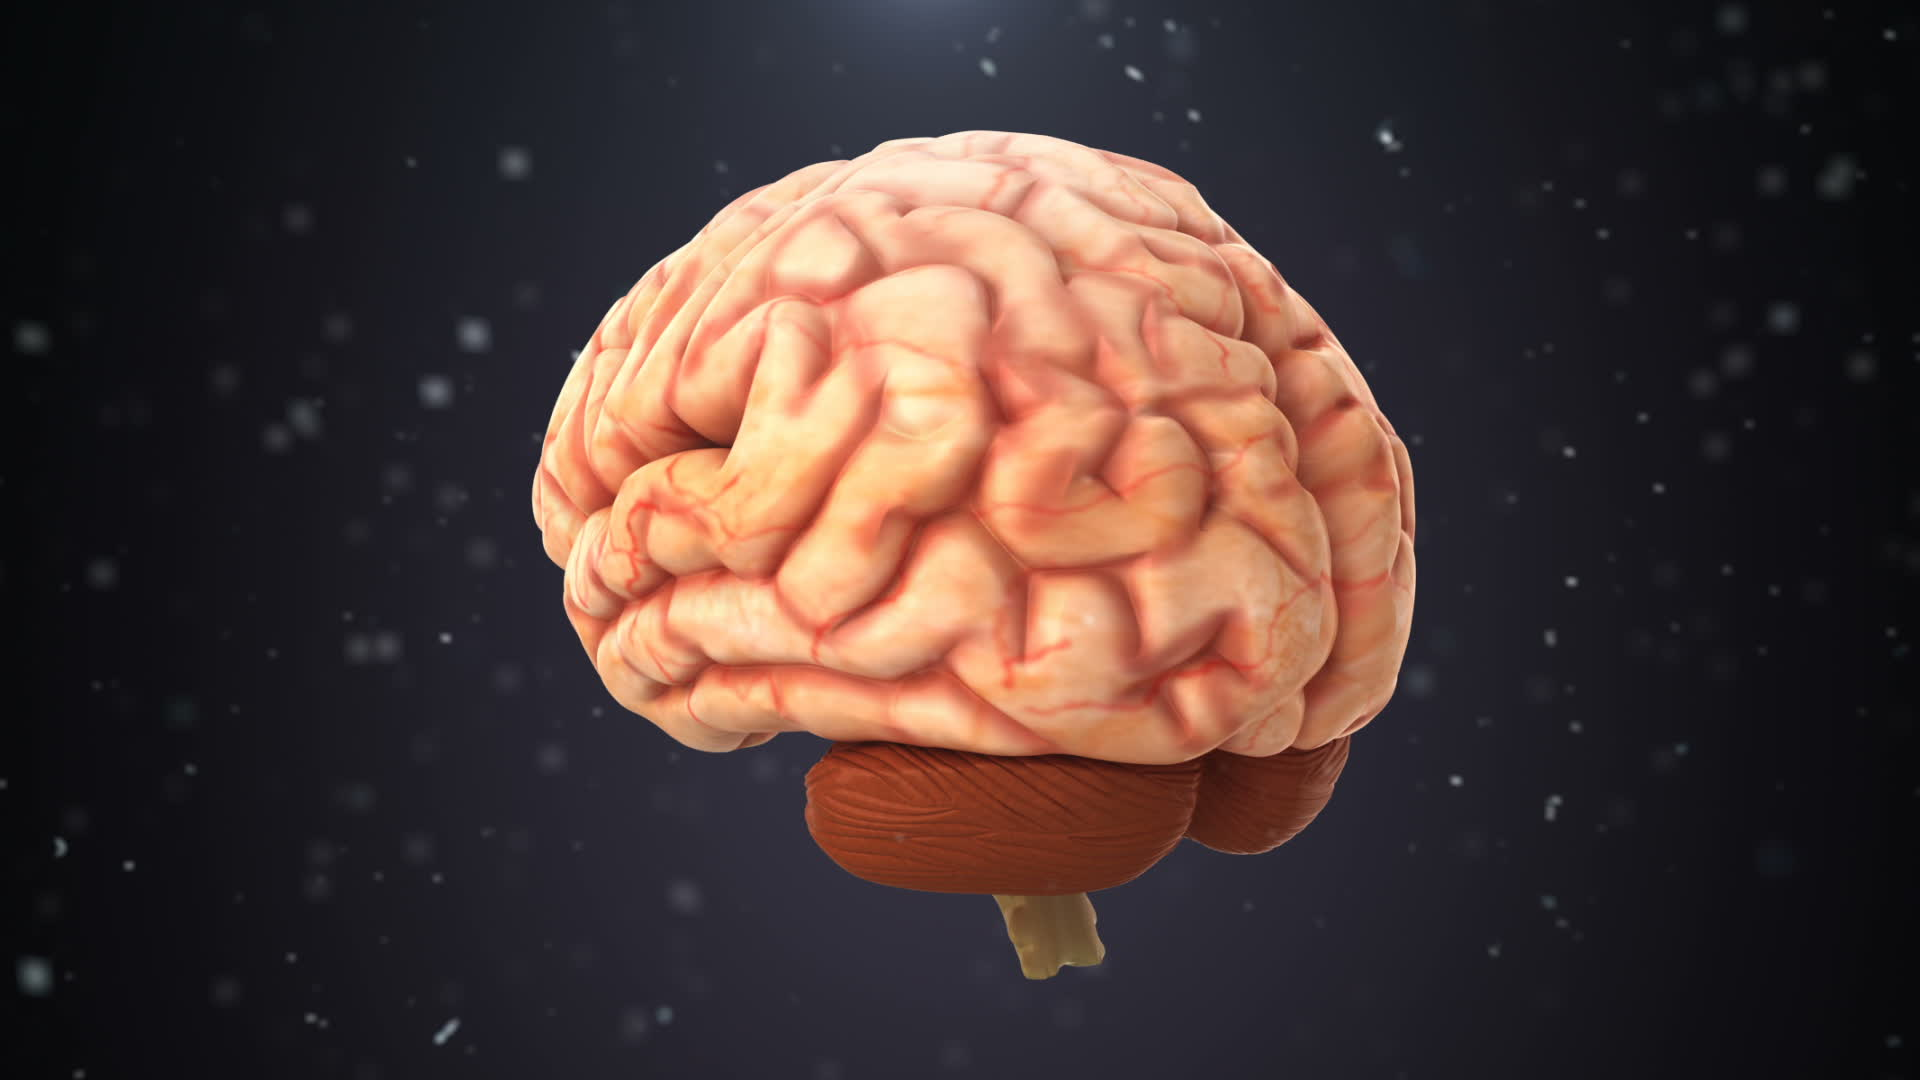 Medical 3D Model - Brain